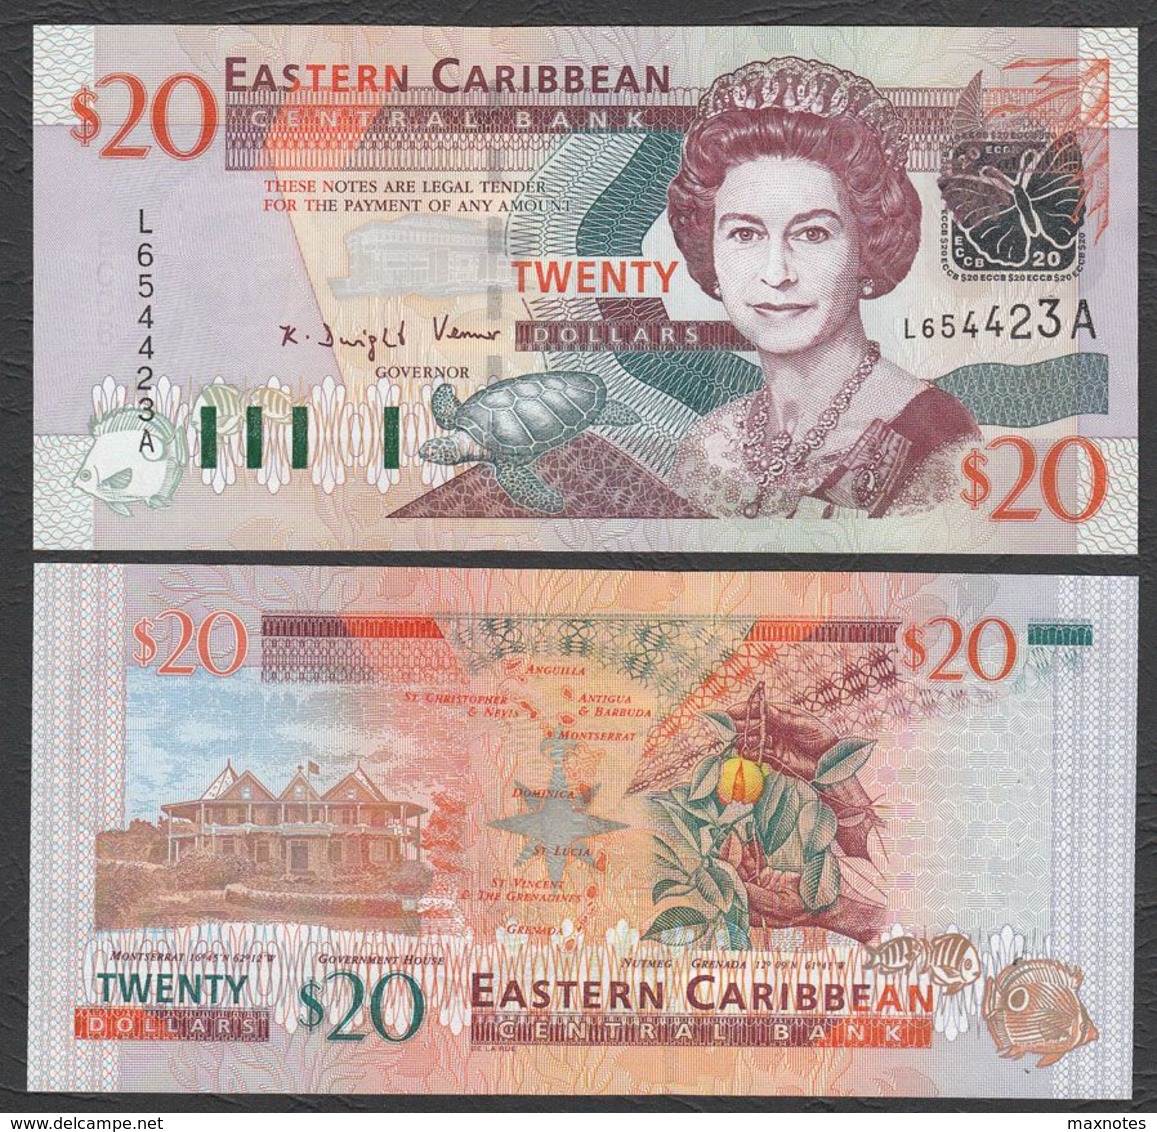 CARAIBI ORIENTALE (EASTERN CARIBBEAN) : 20 Dollars - P44a - ANTIGUA - Queen Elisabeth II - 2003 - UNC - Caraïbes Orientales